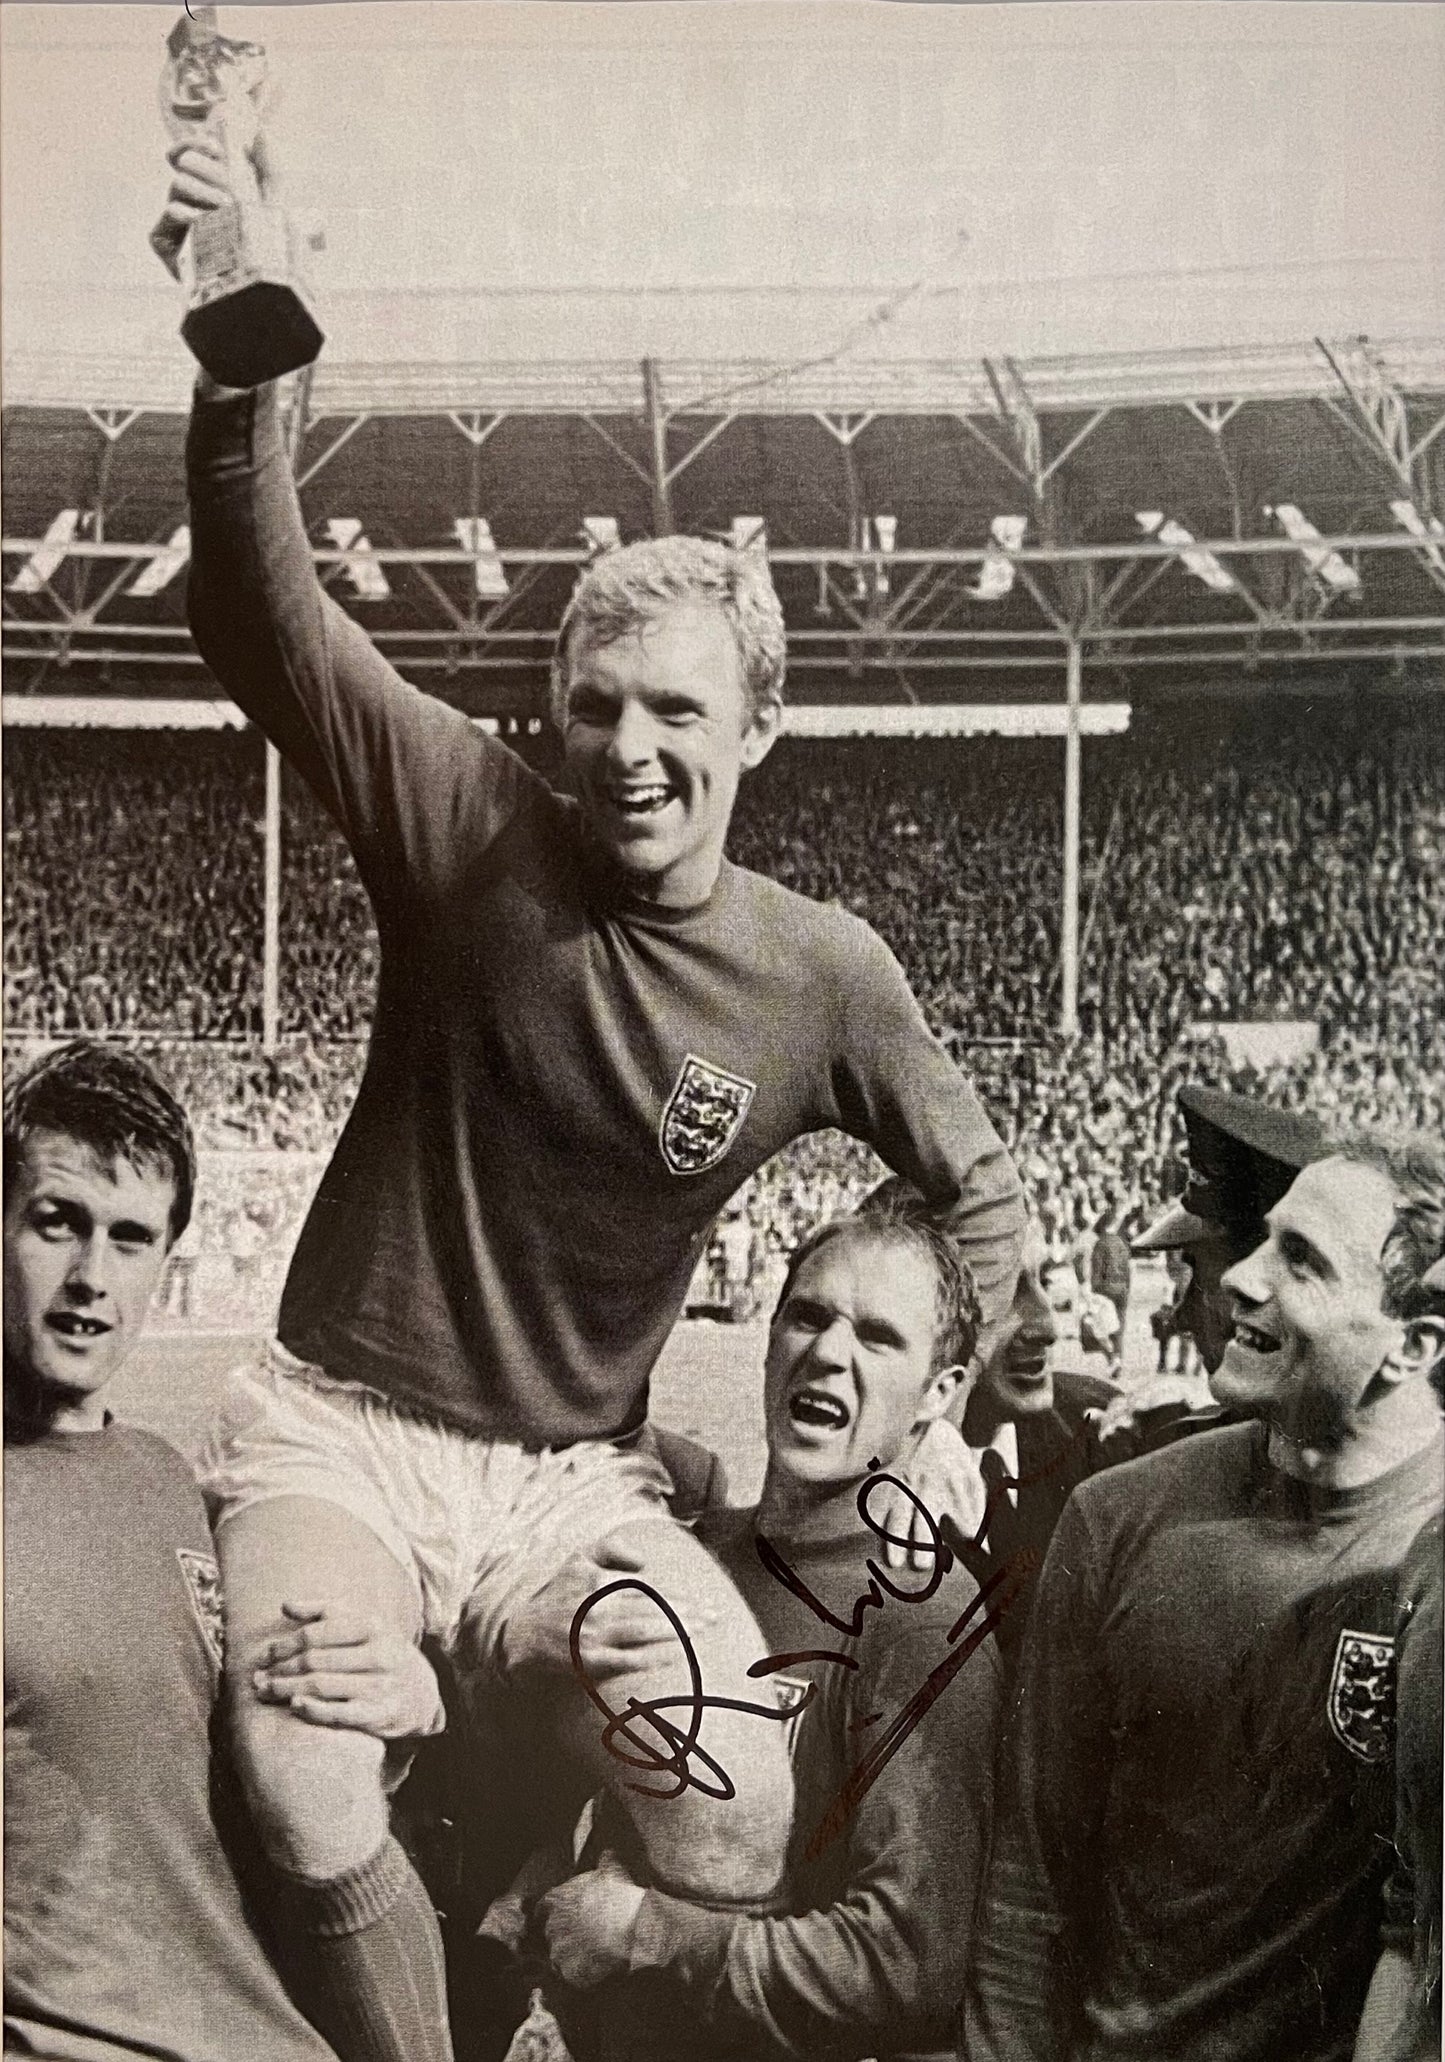 RAY WILSON, ENGLAND WORLD CUP WINNER, HAND SIGNED PHOTO WITH COA